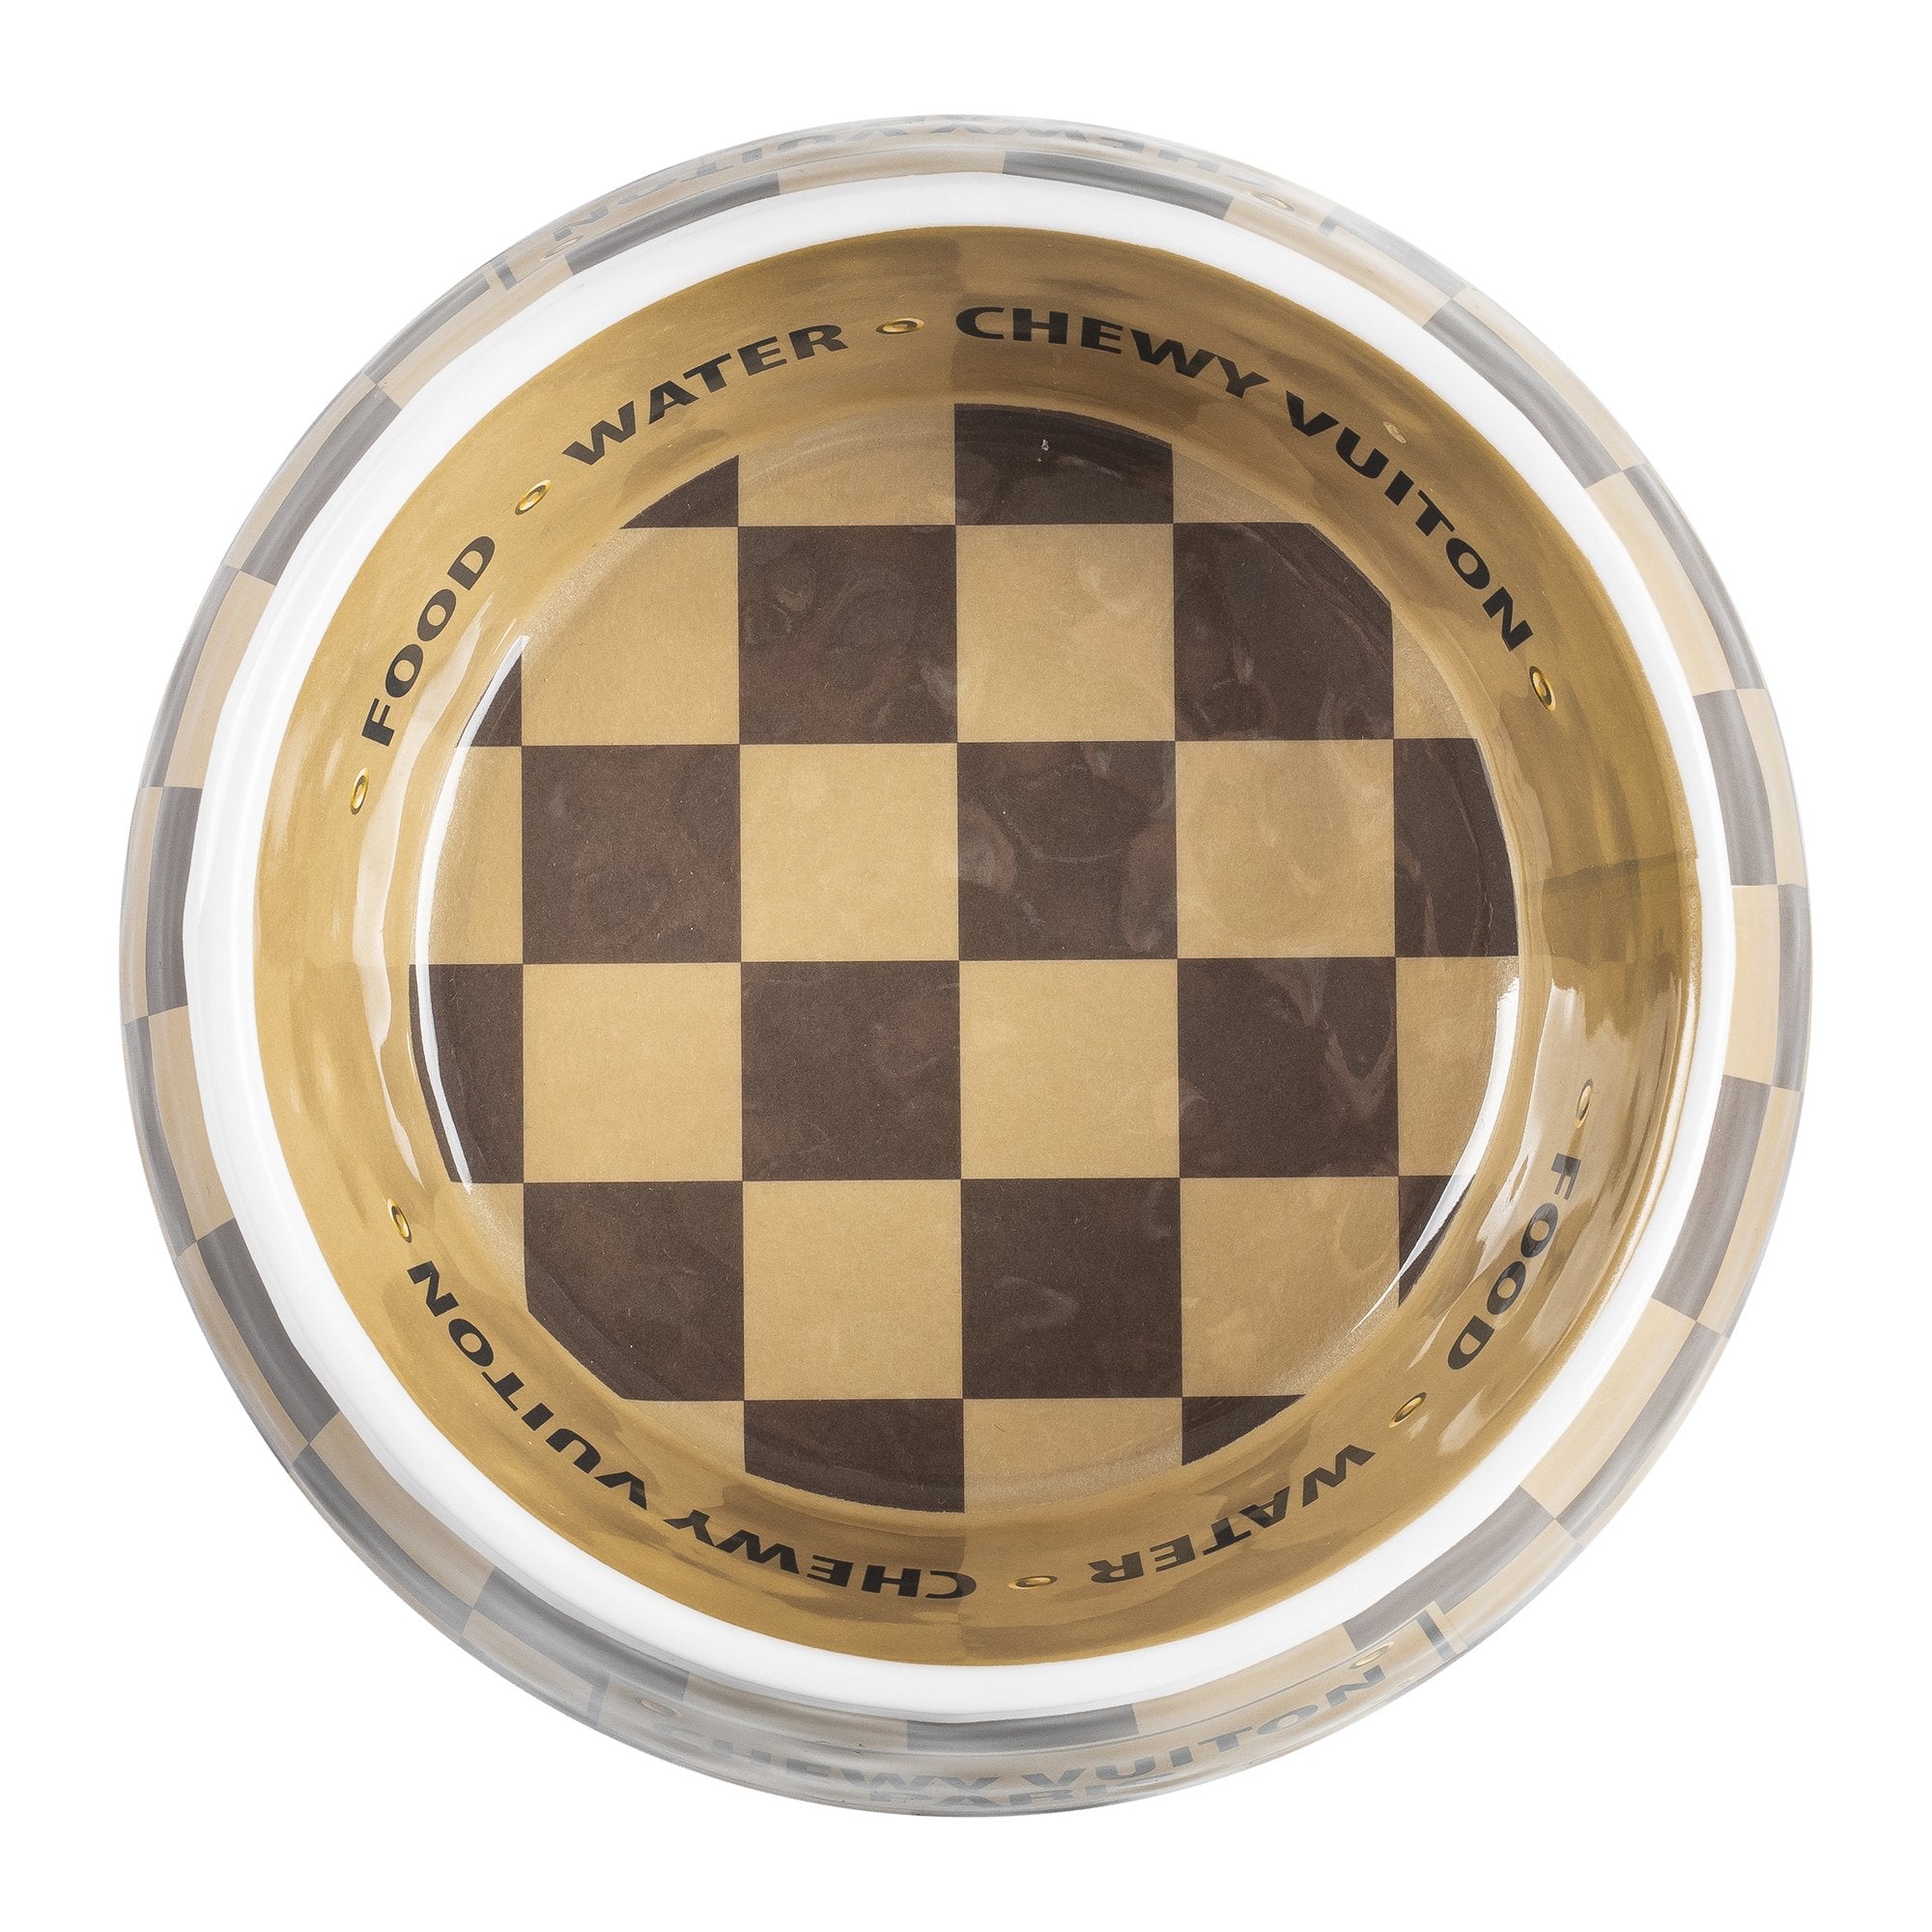 Checker Chewy Vuiton Paris Bowl Medium – Pet Empire and Supplies